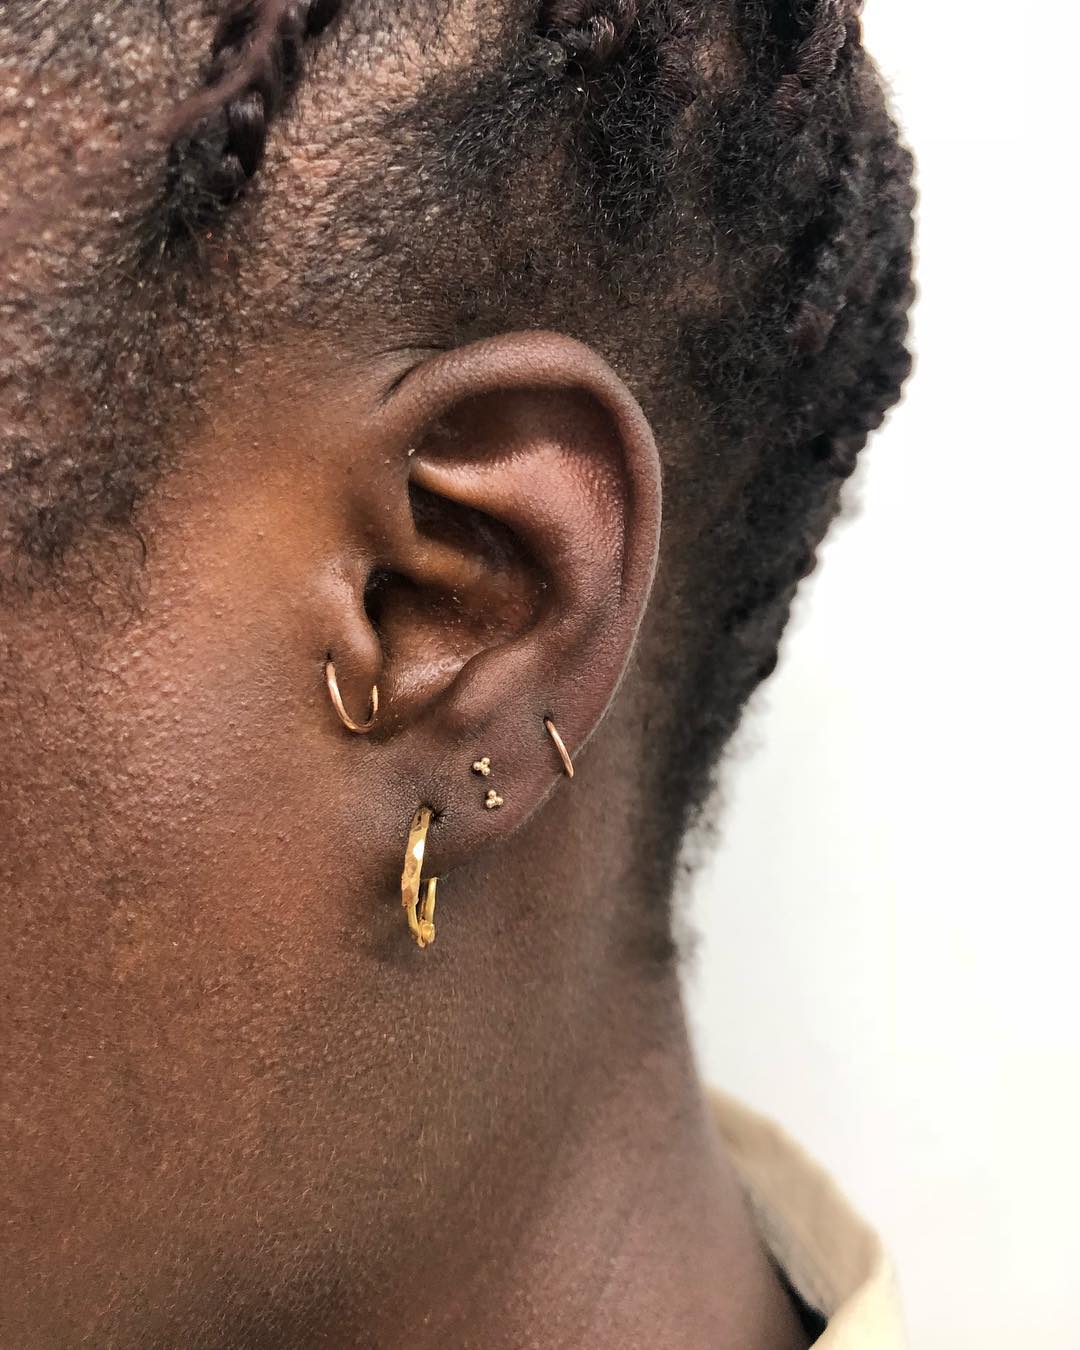 Piercings na orelha tragus